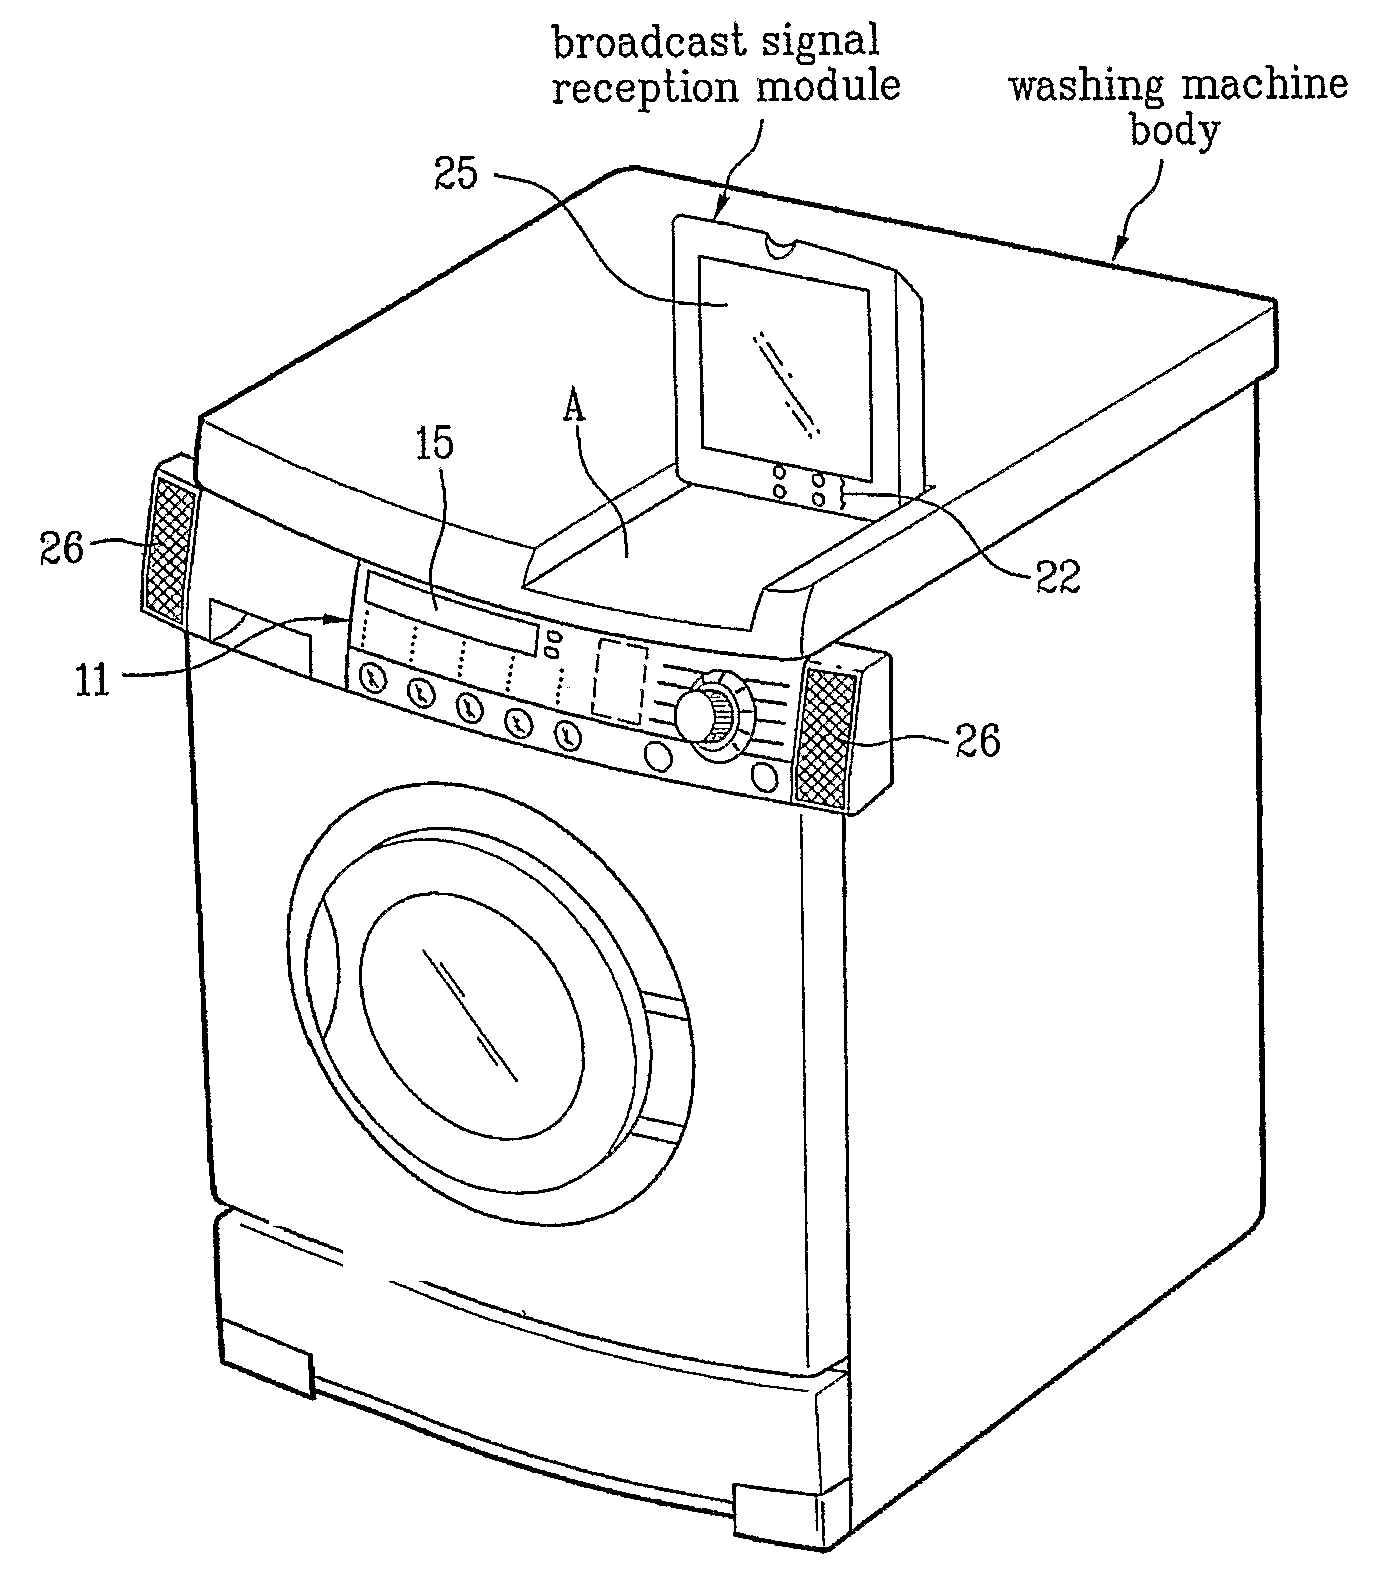 Washing machine having broadcasting receiver